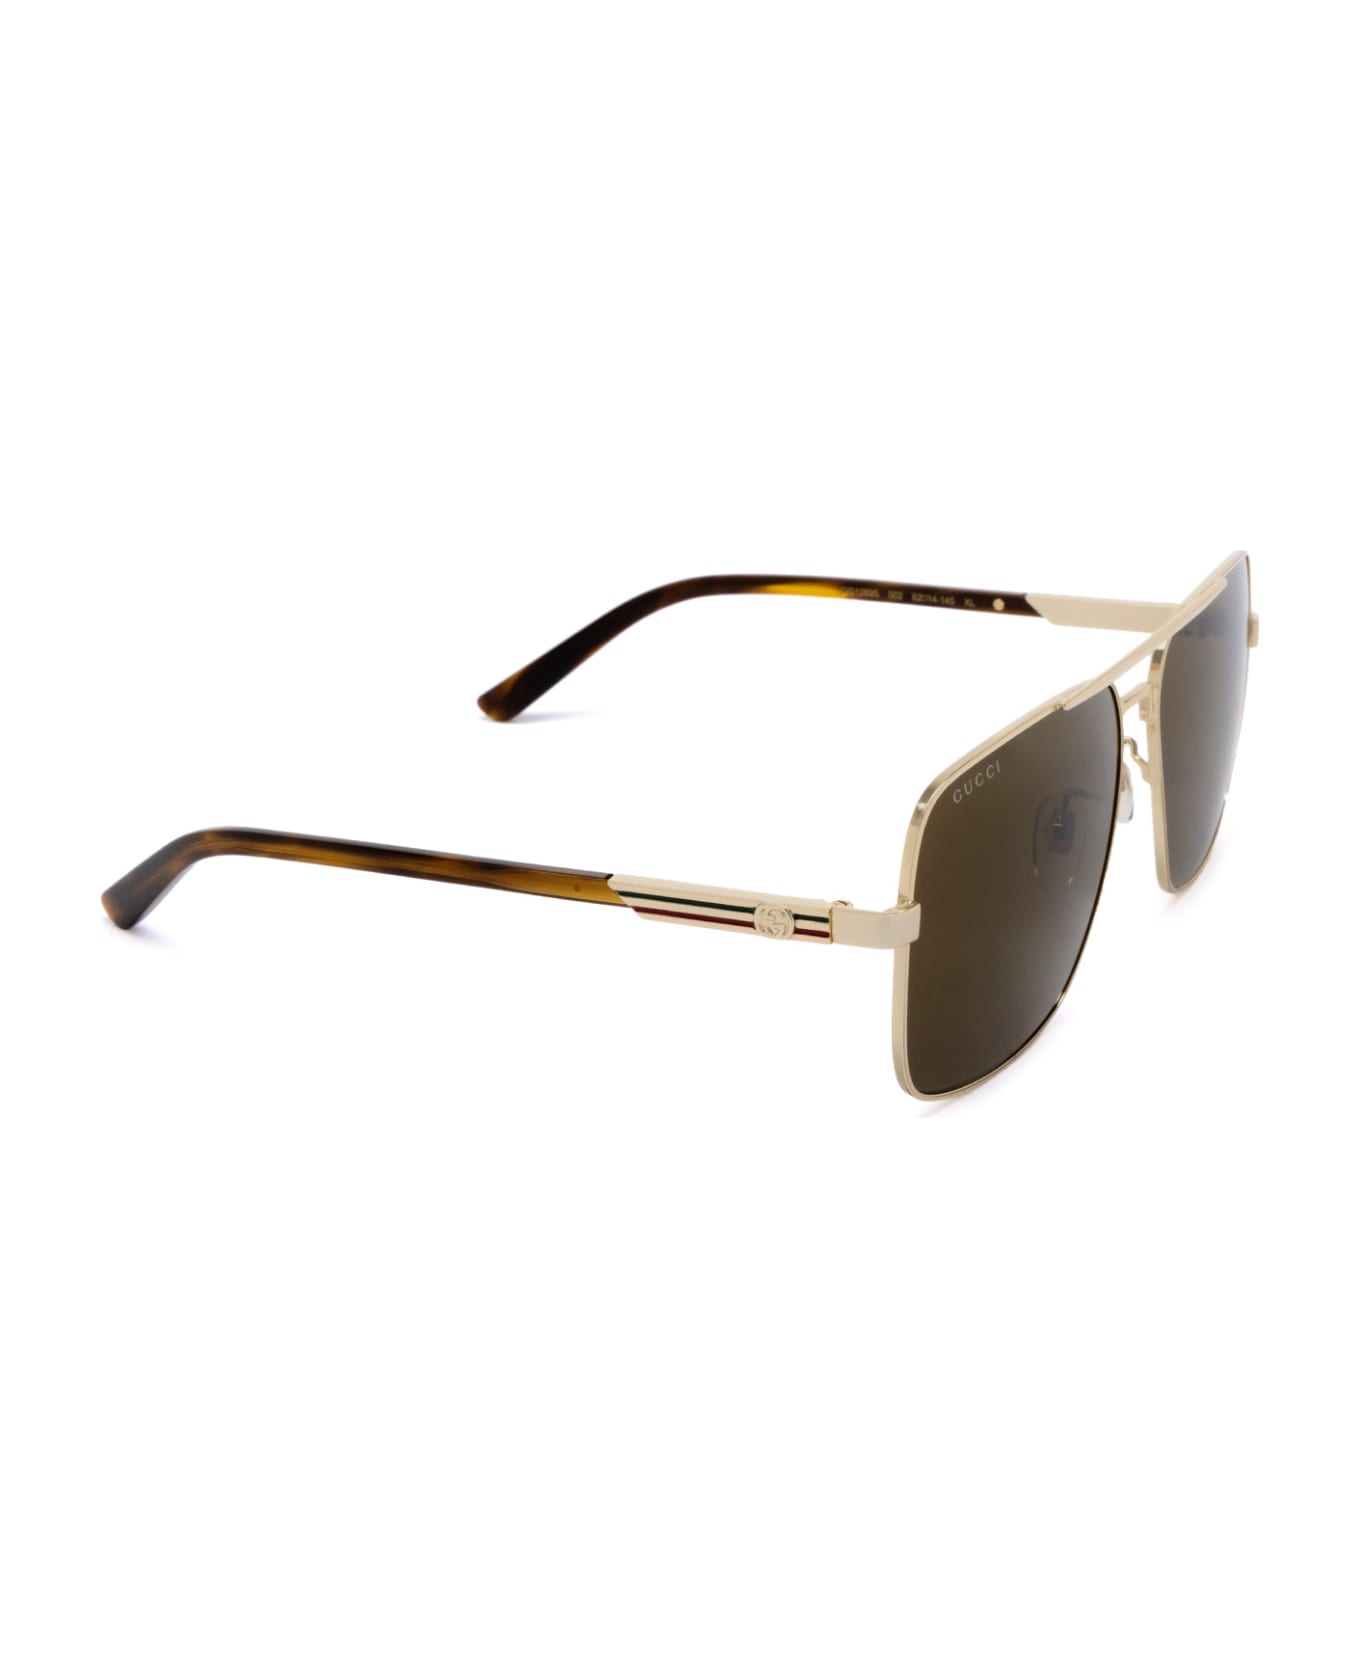 Gucci Eyewear Gg1289s Gold Sunglasses - Gold